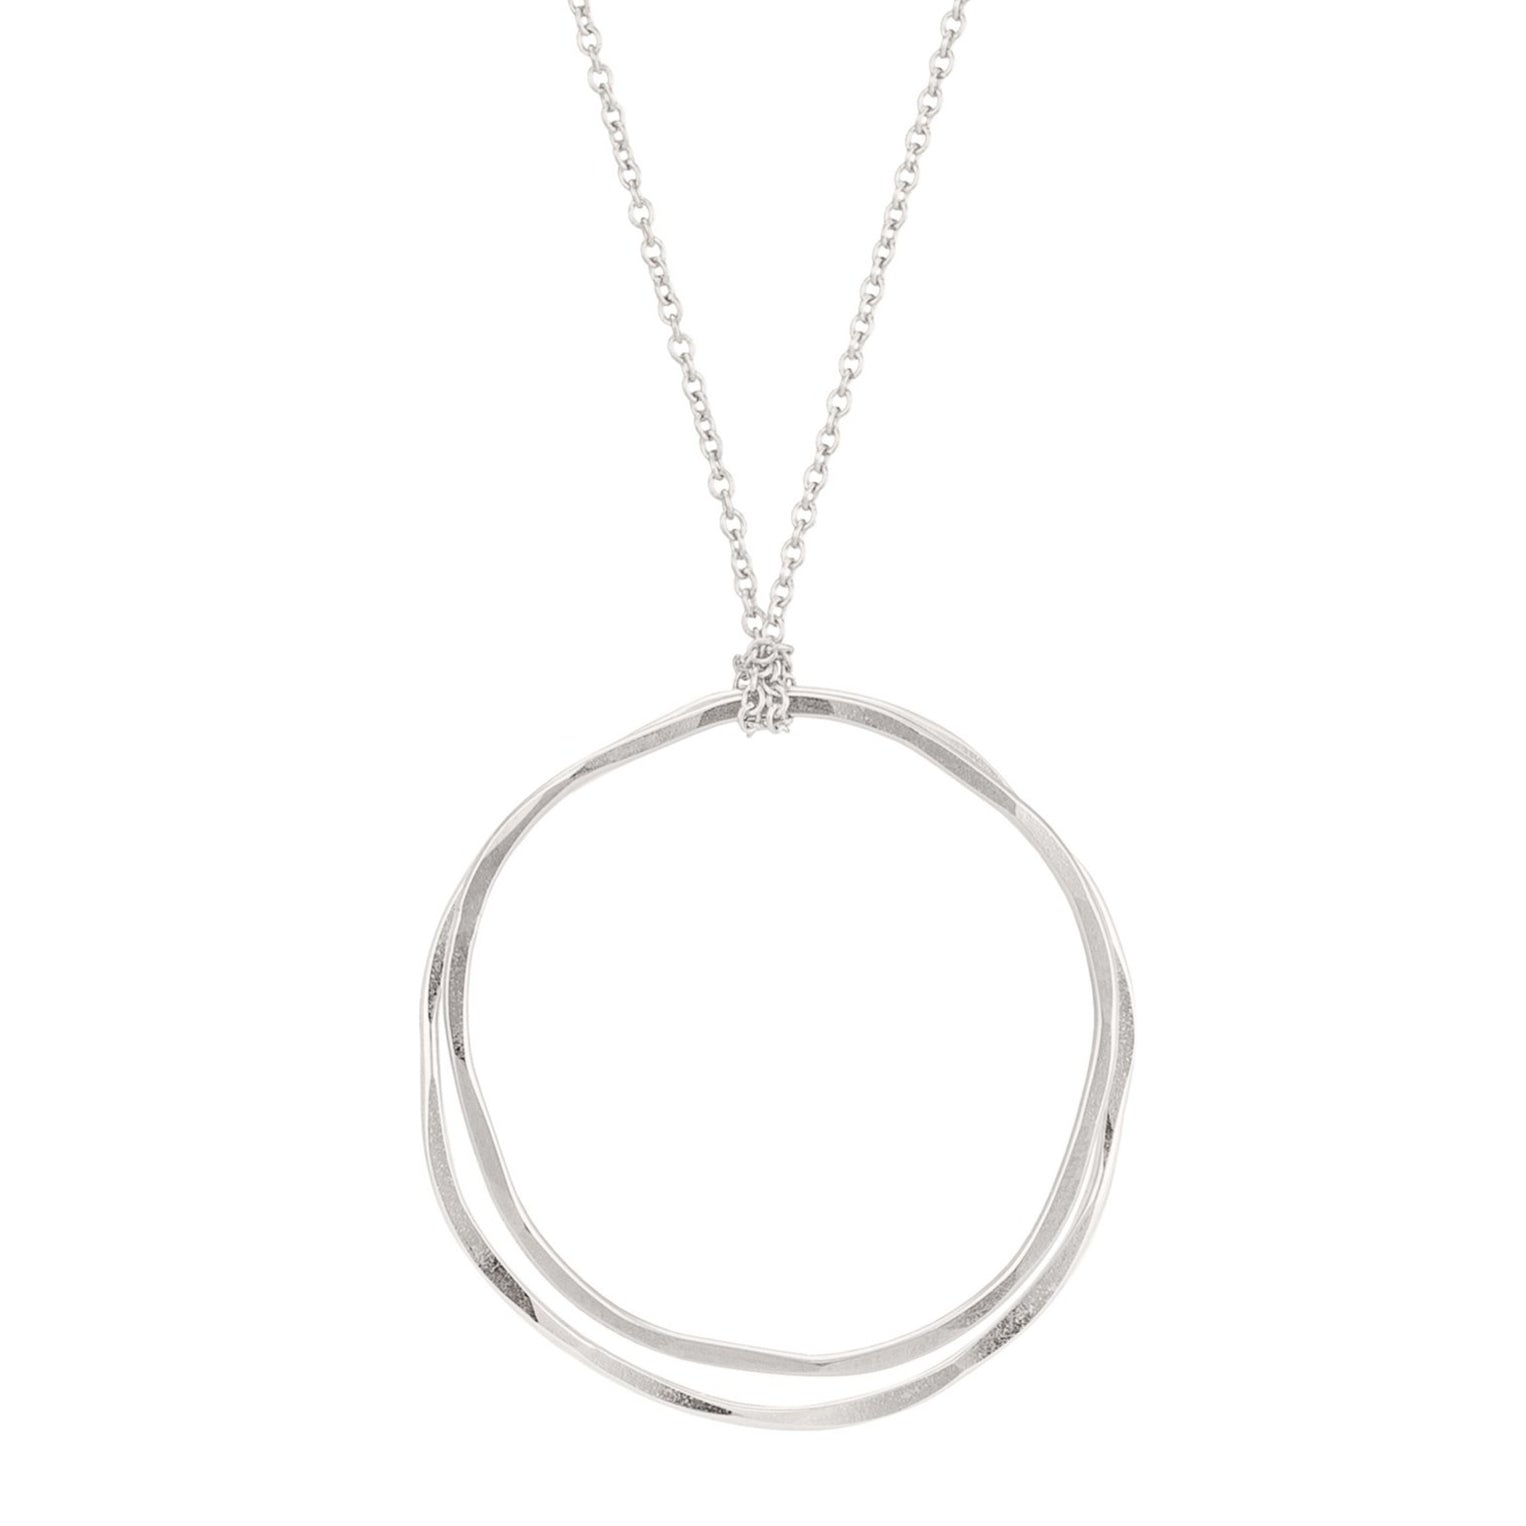 simple caldera necklace | Freshie & Zero